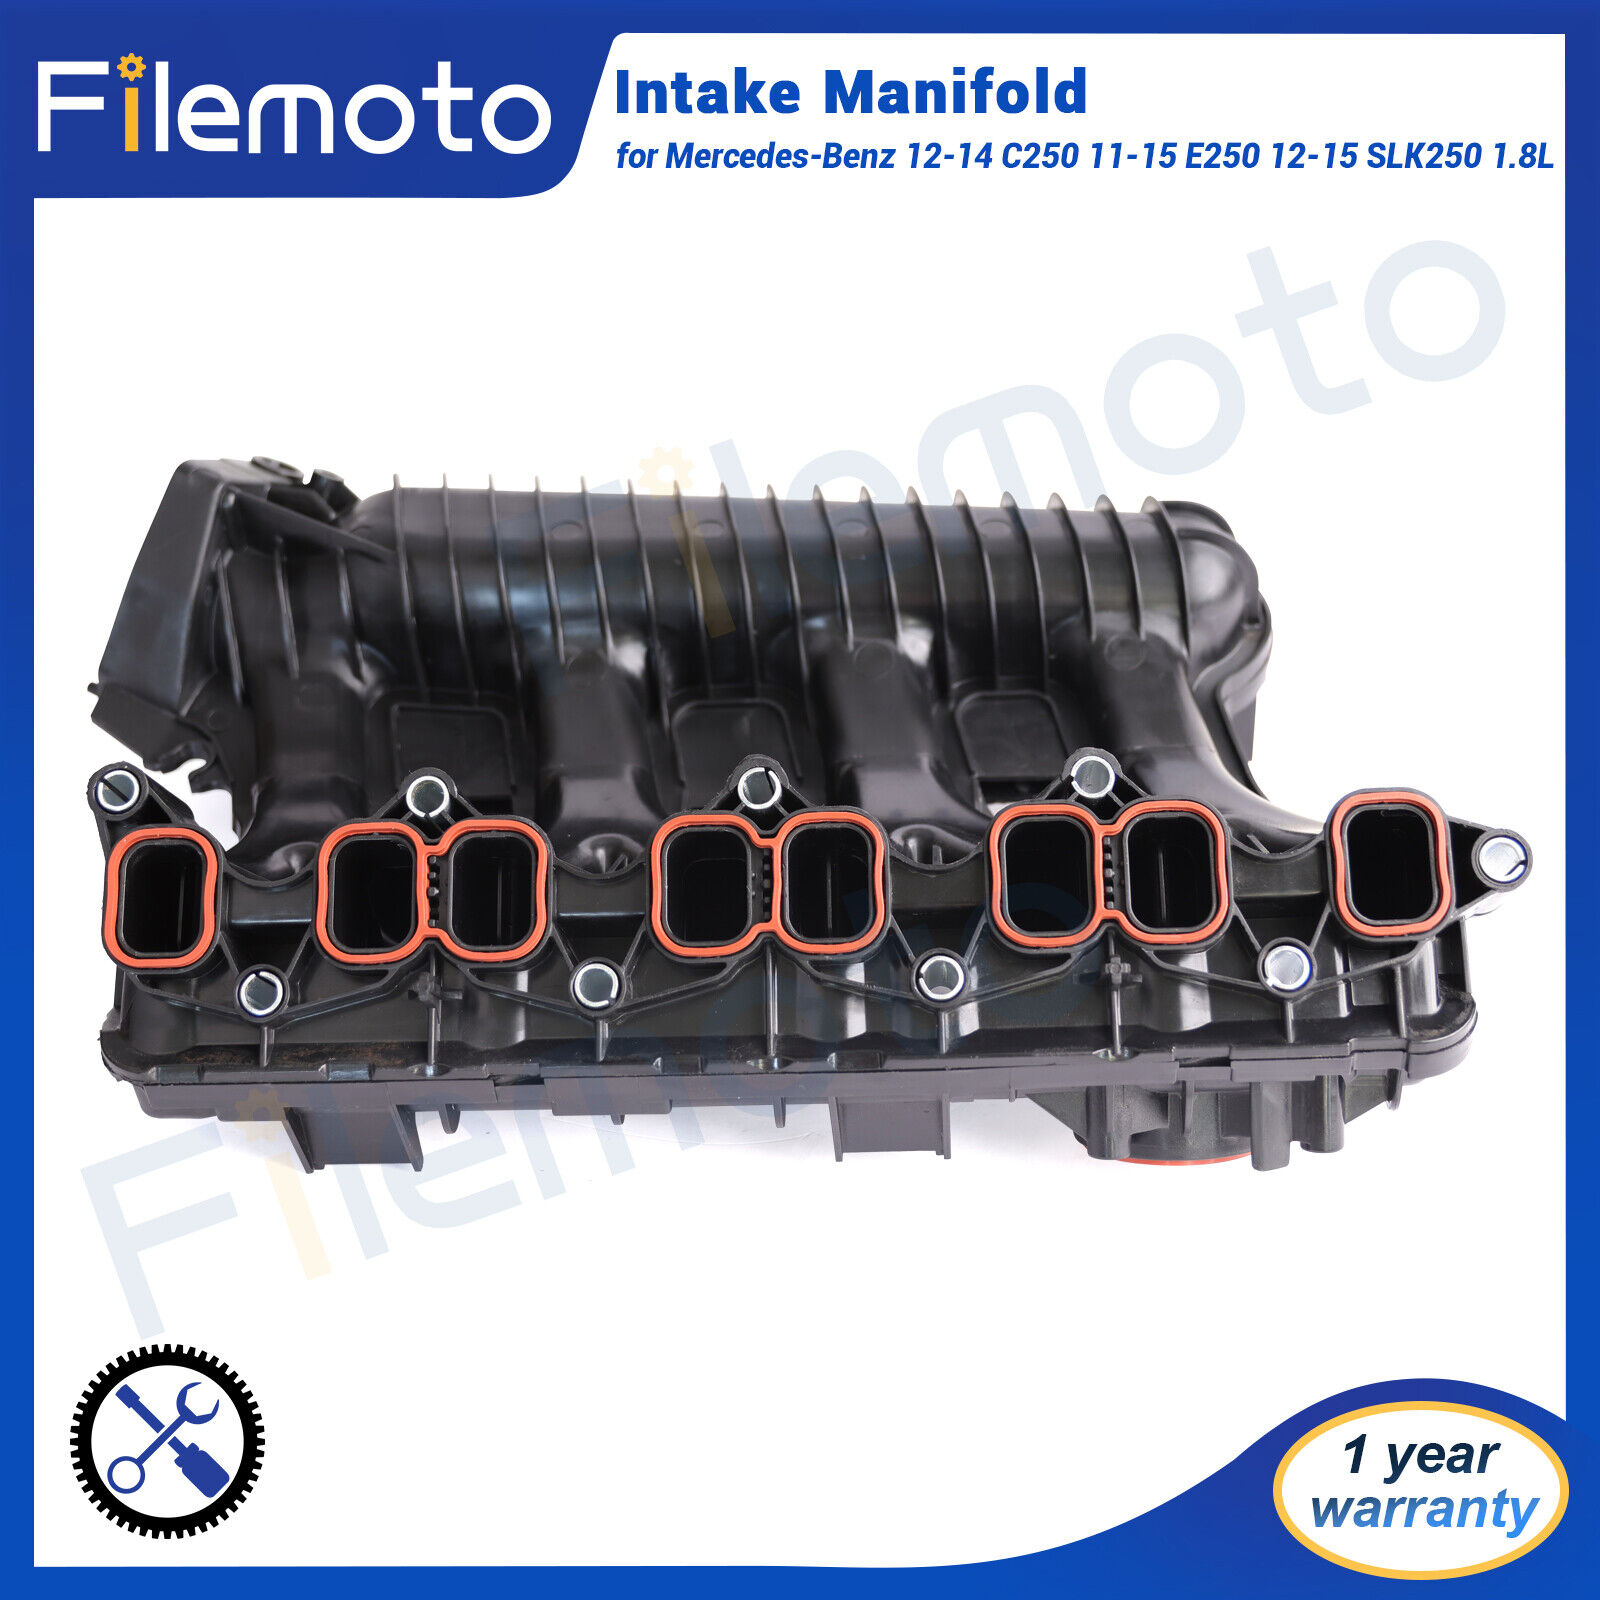 Intake Manifold for Mercedes-Benz W204 12-14 C250 11-15 E250 12-15 SLK250 1.8L